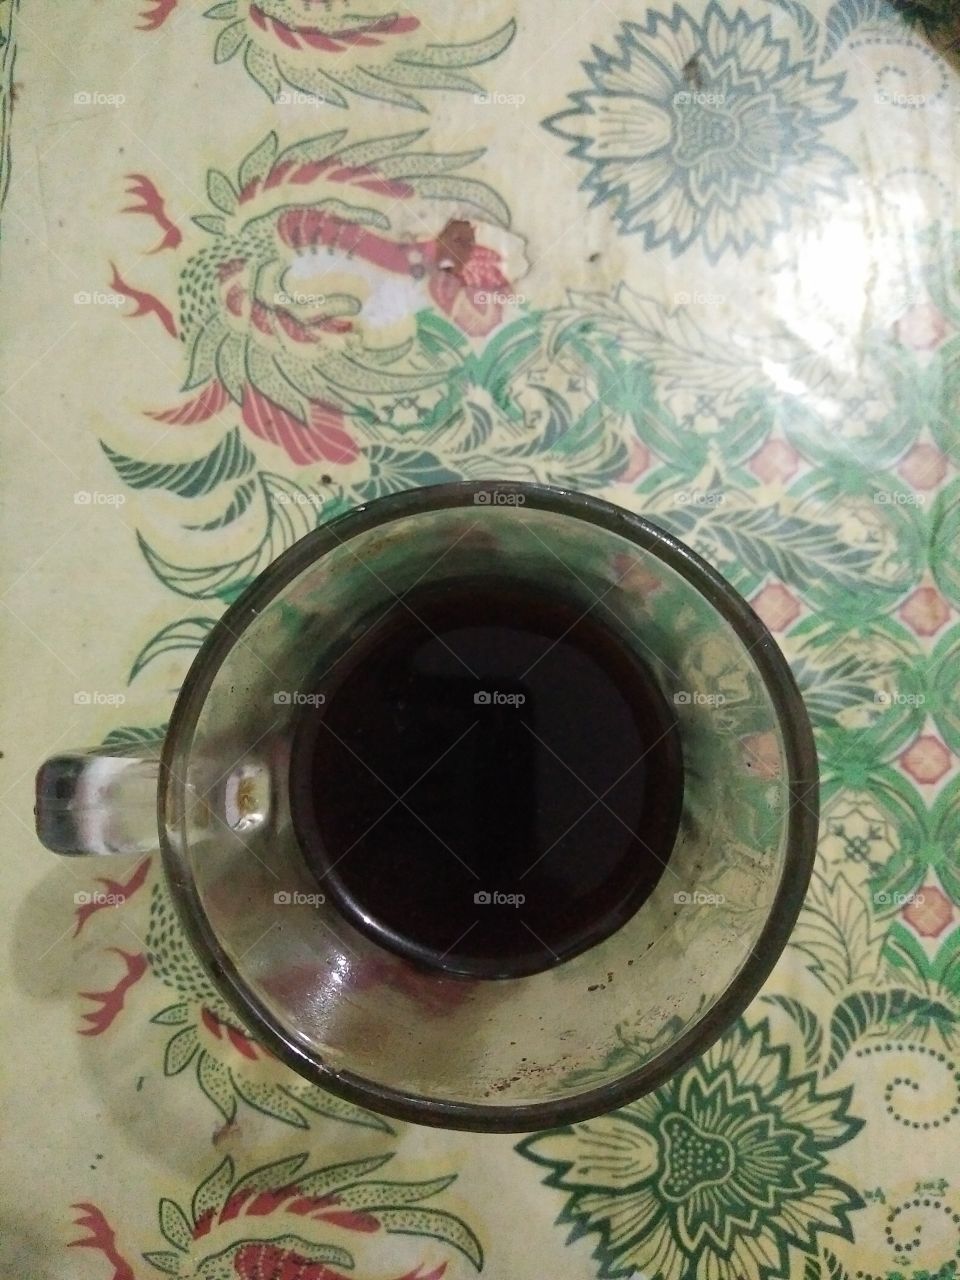 Coffe Nusantara from indonesia eas